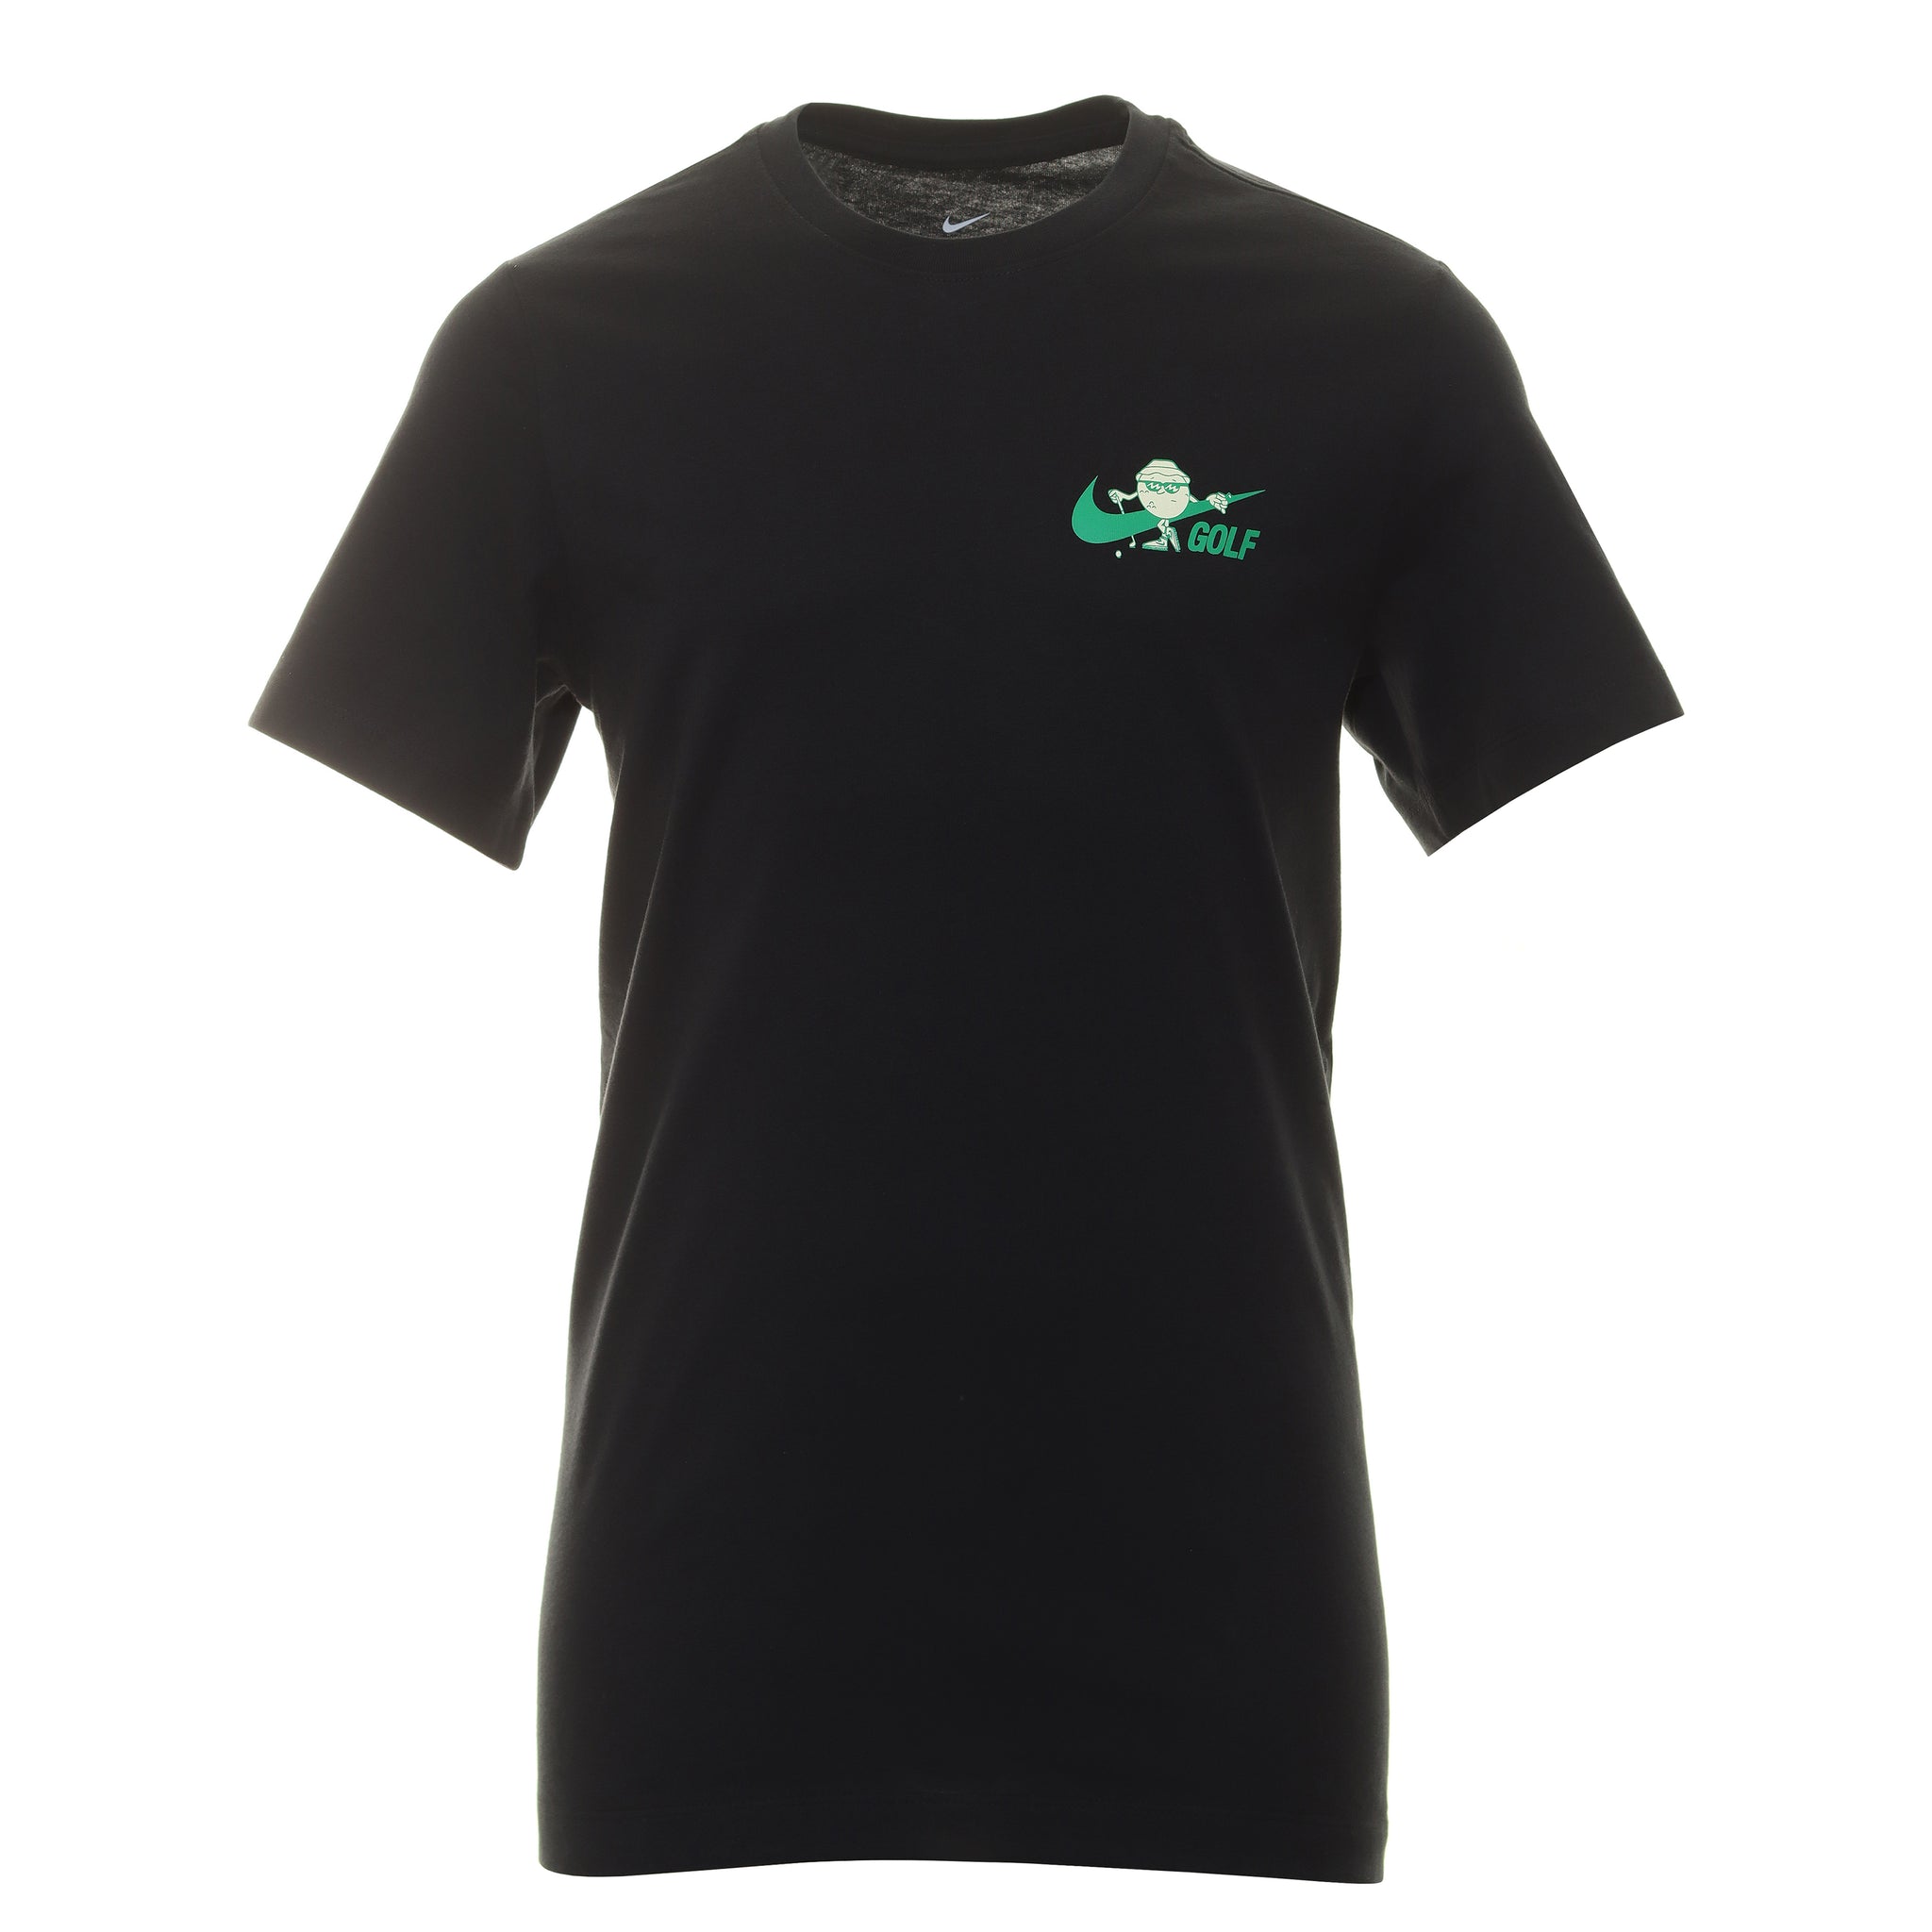 nike-golf-energy-tee-shirt-fd0037-black-010